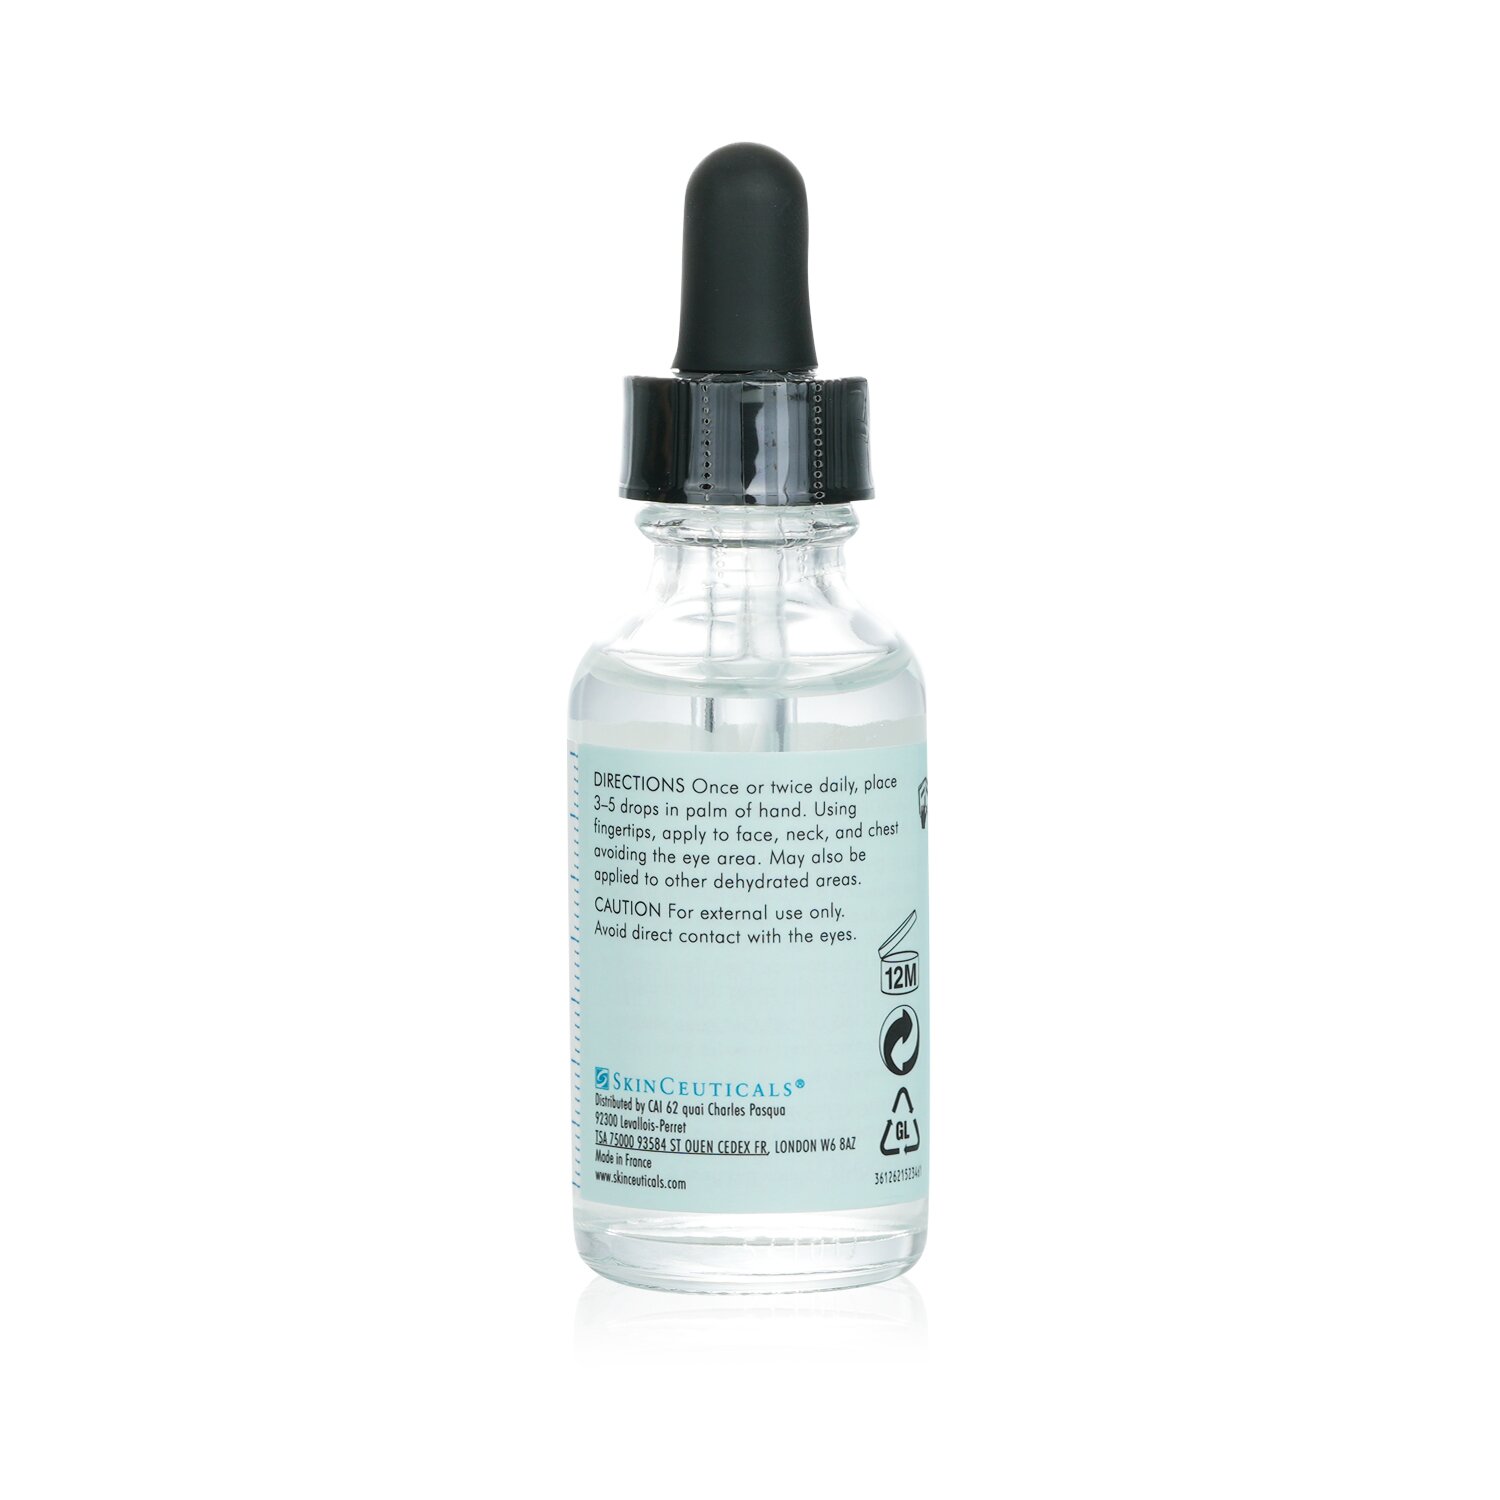 SkinCeuticals Hydrating B5 - Moisture Enhancing Fluid 30ml/1oz